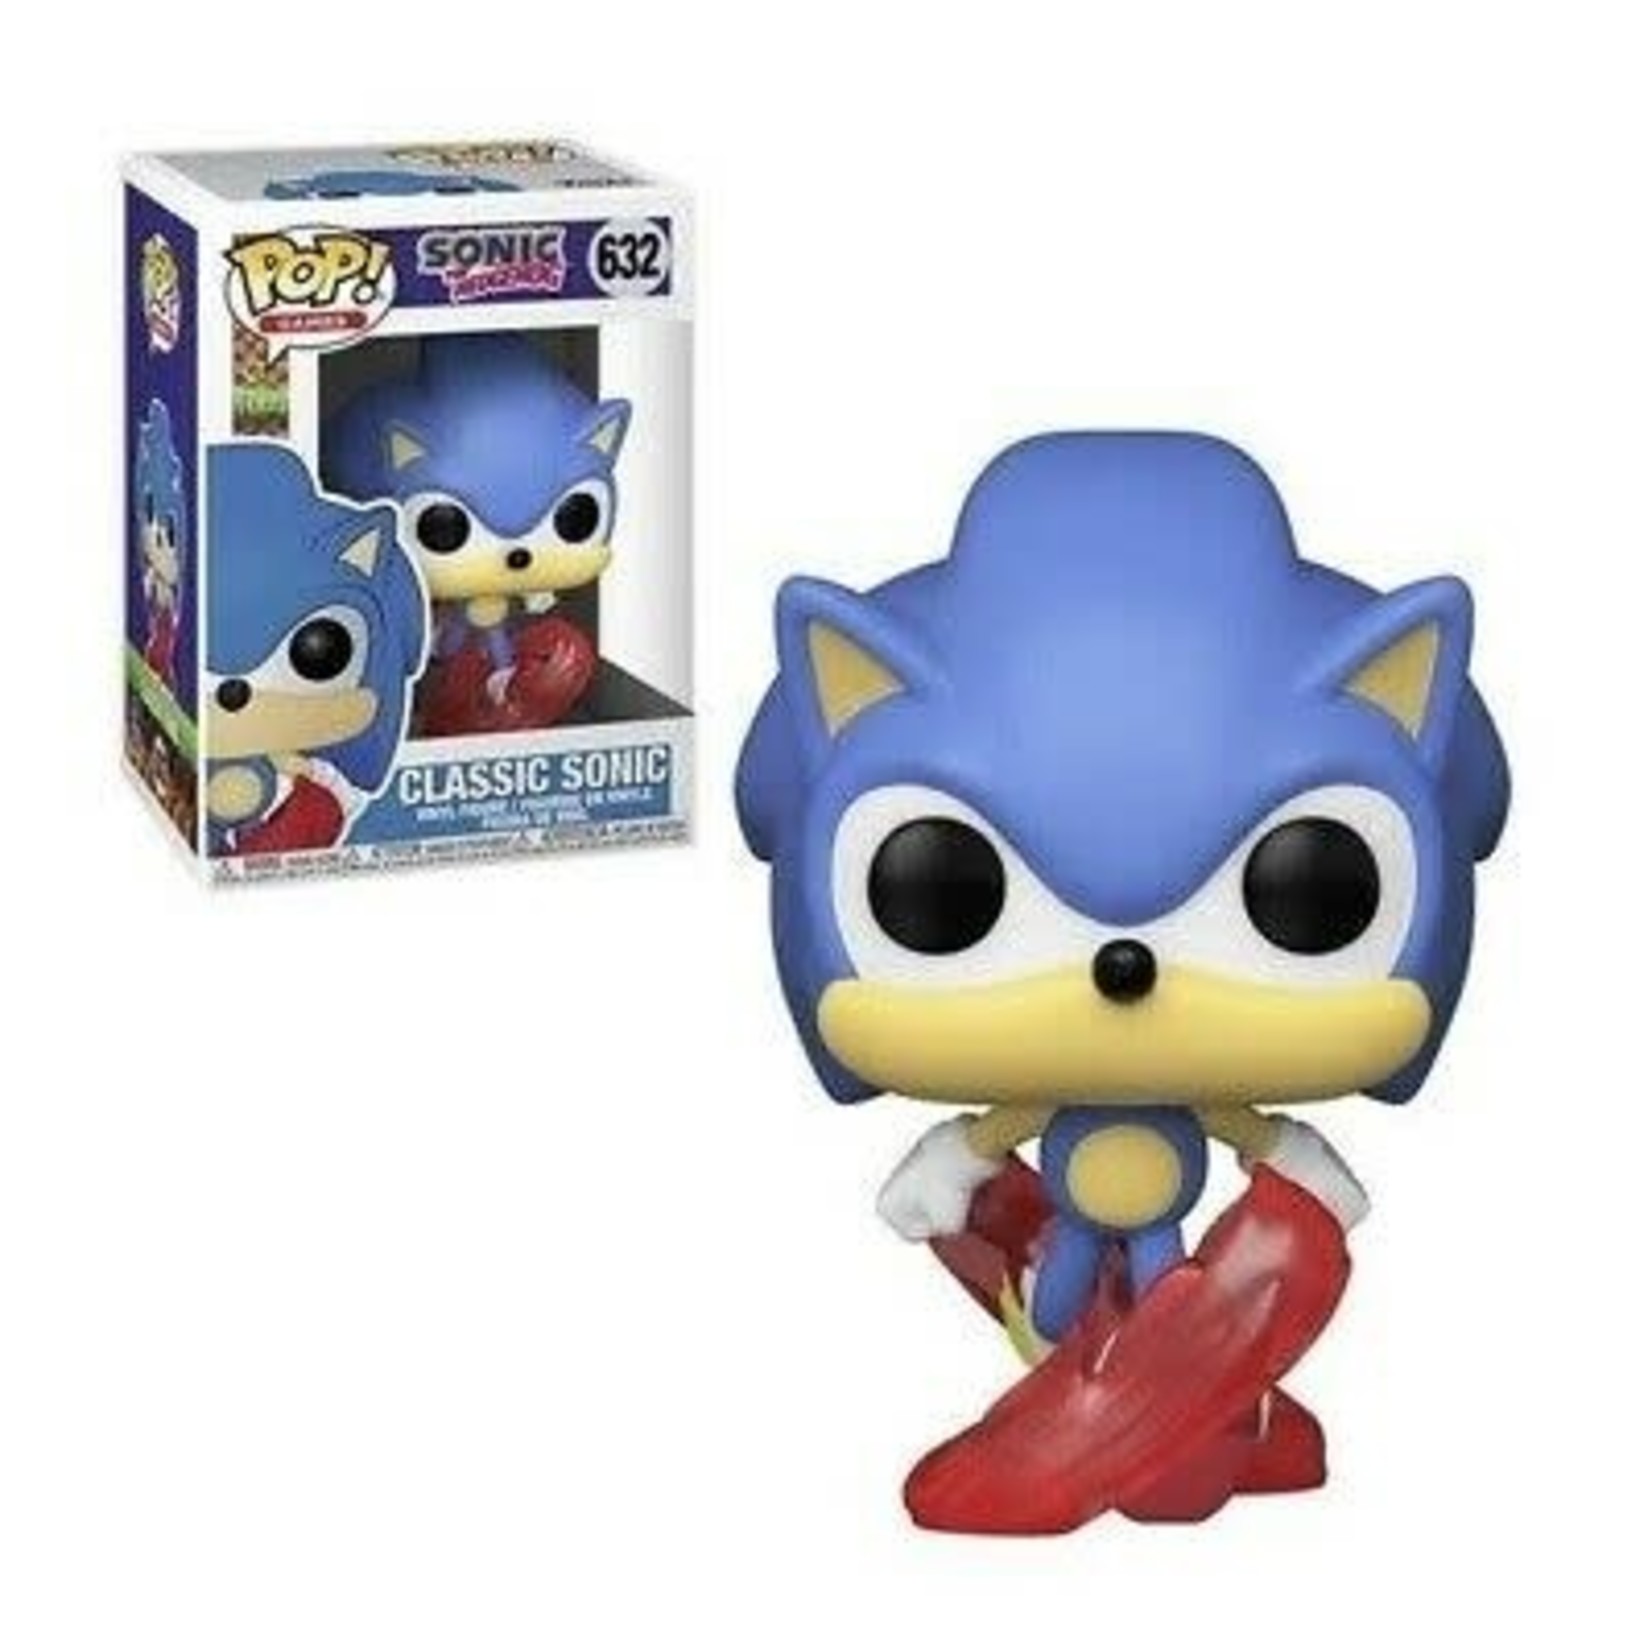 Funko Pop! Games Sonic the Hedgehog Classic Sonic #632